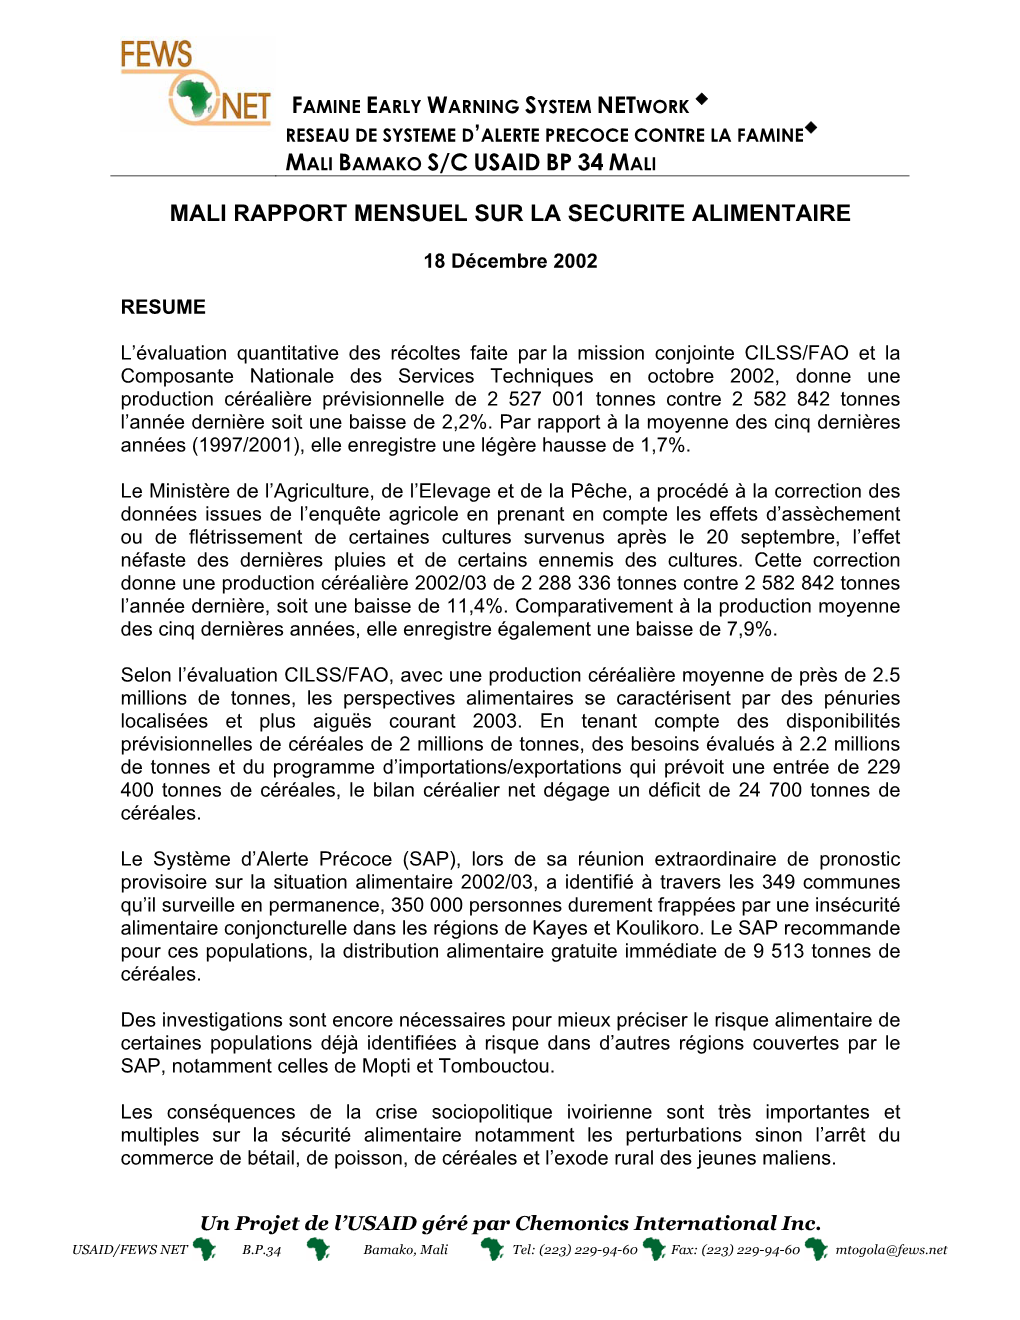 Mali Bamako S/C Usaid Bp 34 M Mali Rapport Mensuel Sur